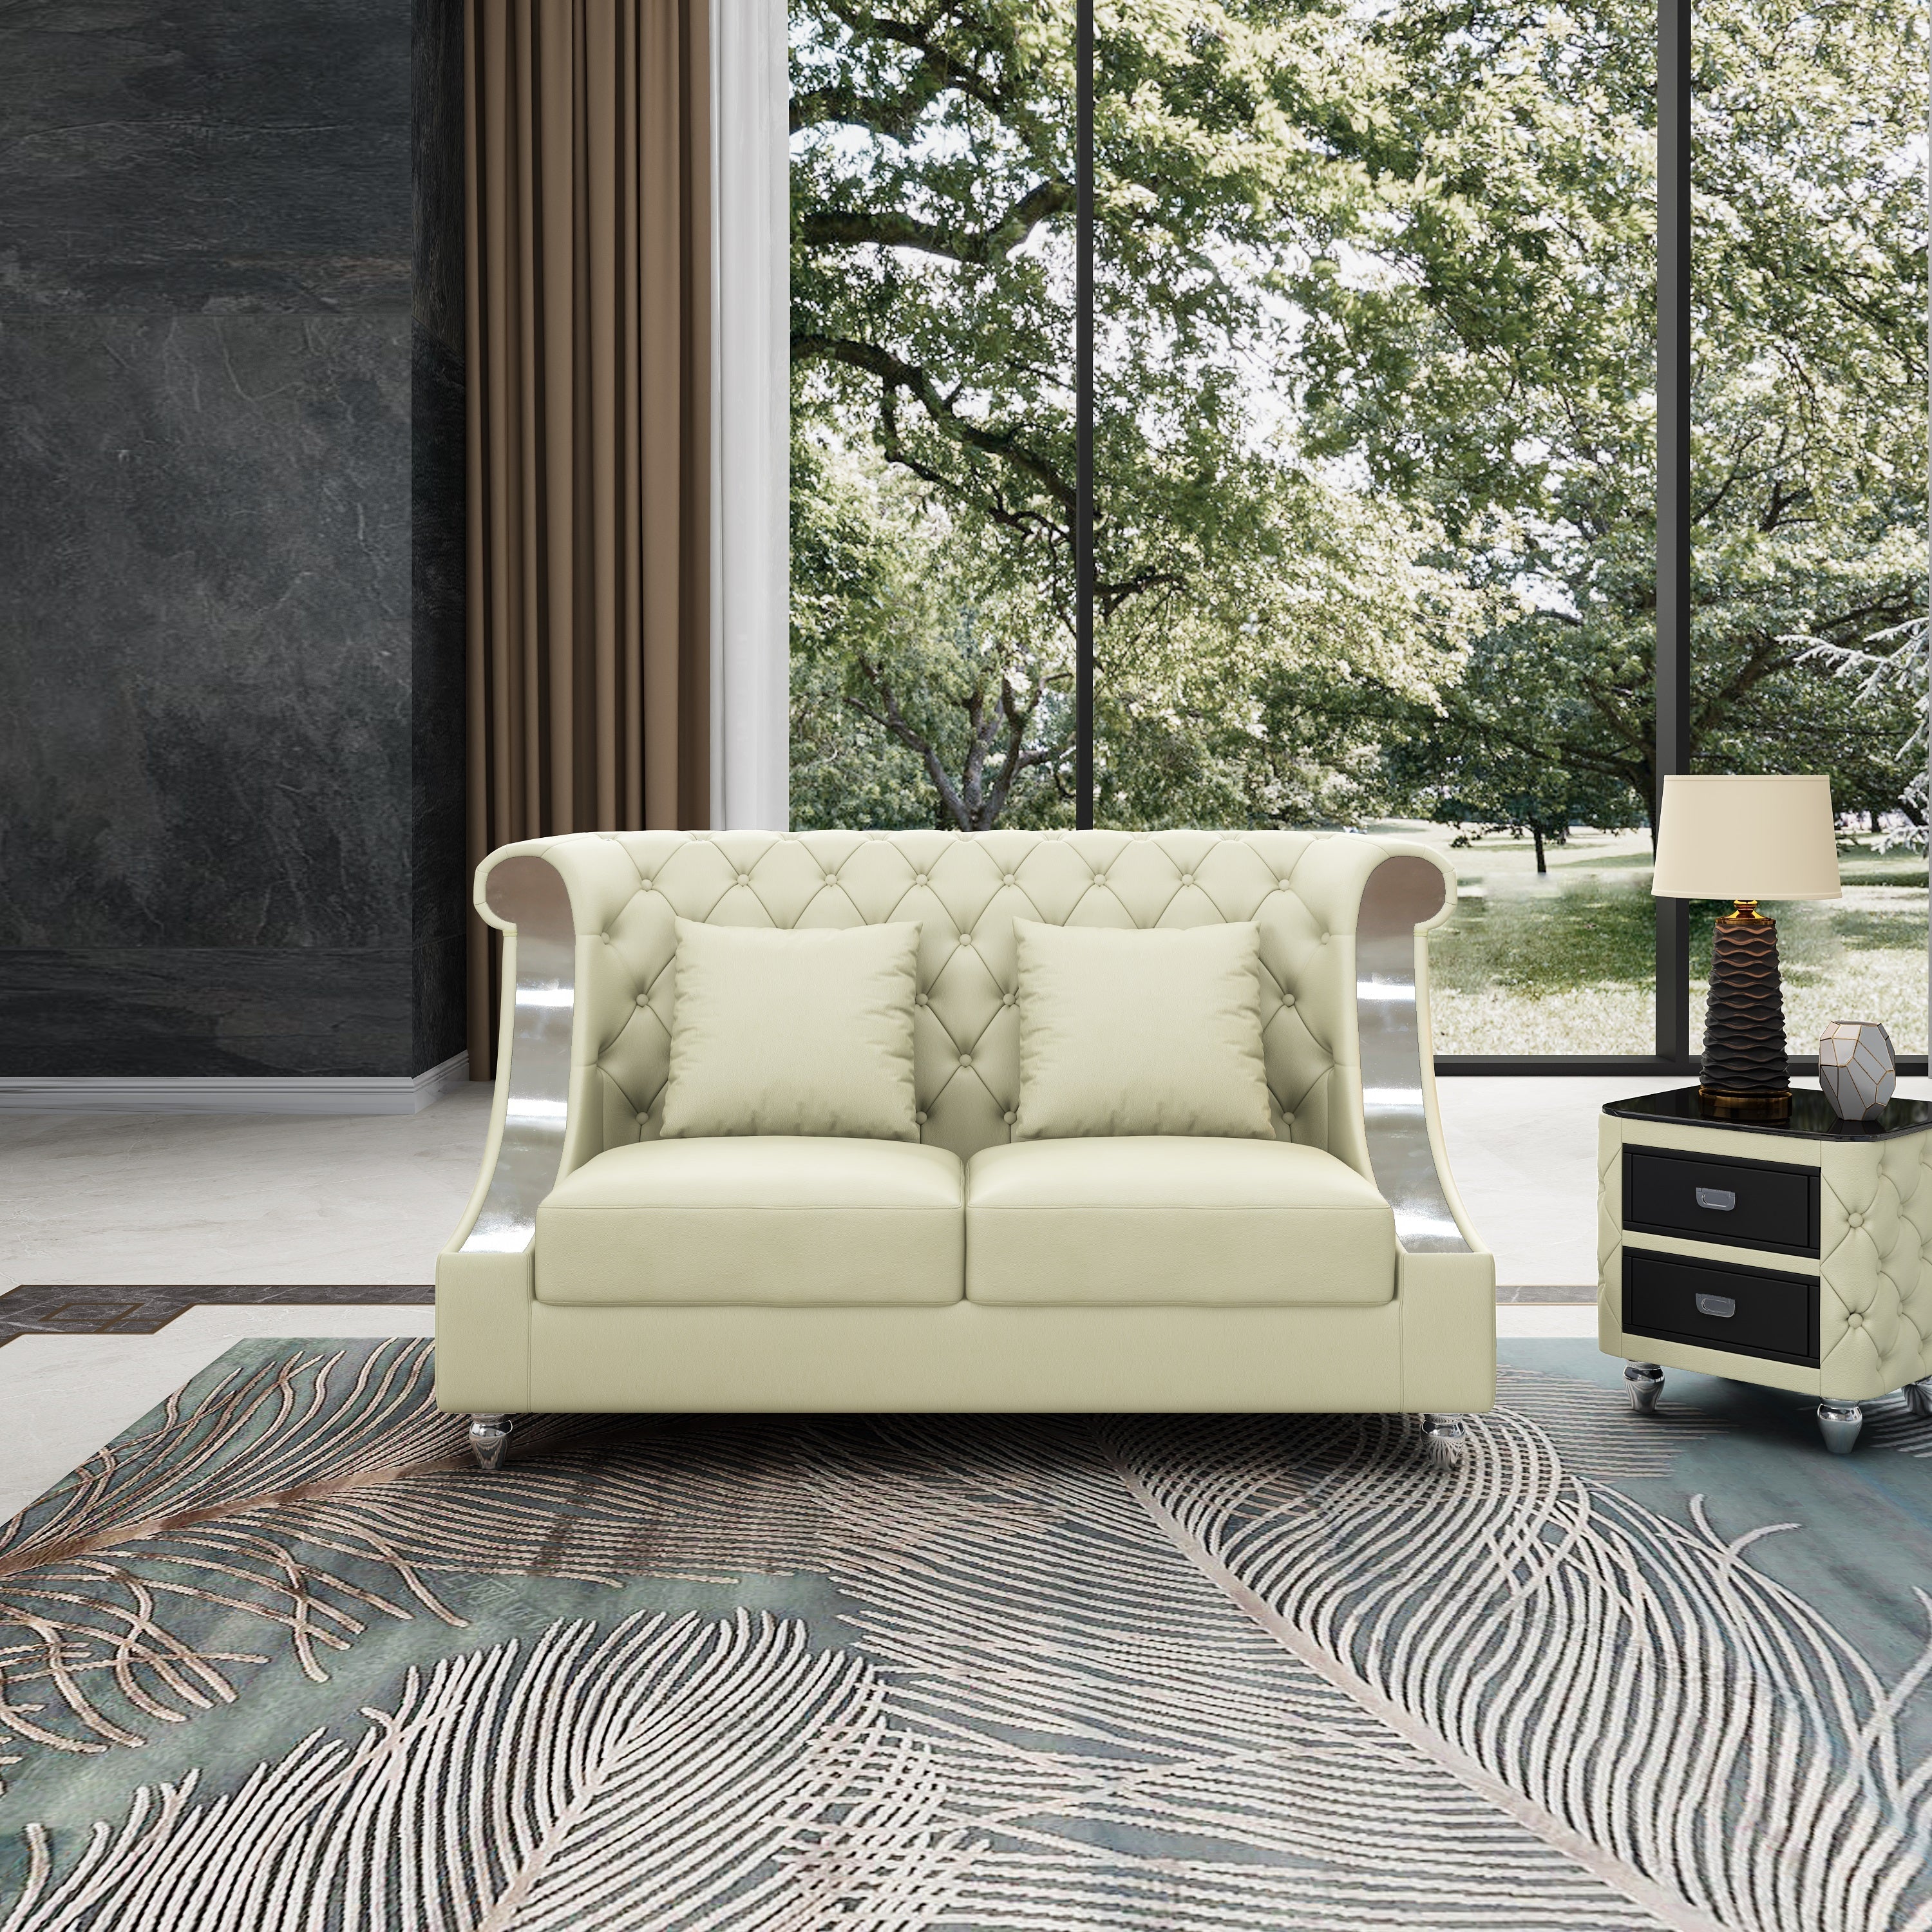 European Furniture - Mayfair Loveseat Premium Off White Italian Leather - EF-90280-L - New Star Living